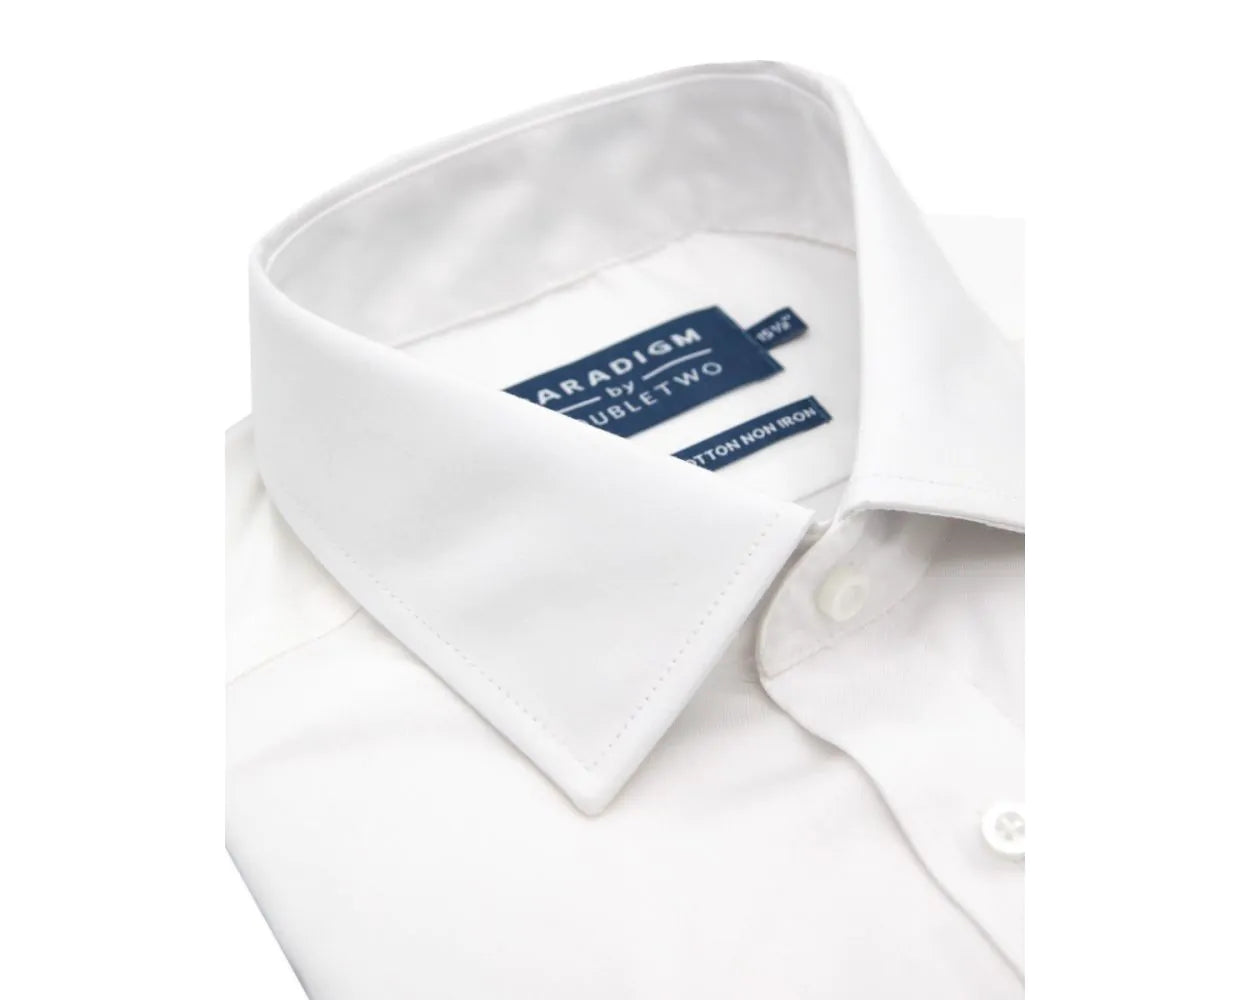 DOUBLE TWO Slim-Fit Paradigm Shirt - Pure Cotton Non Iron Double Cuff – White